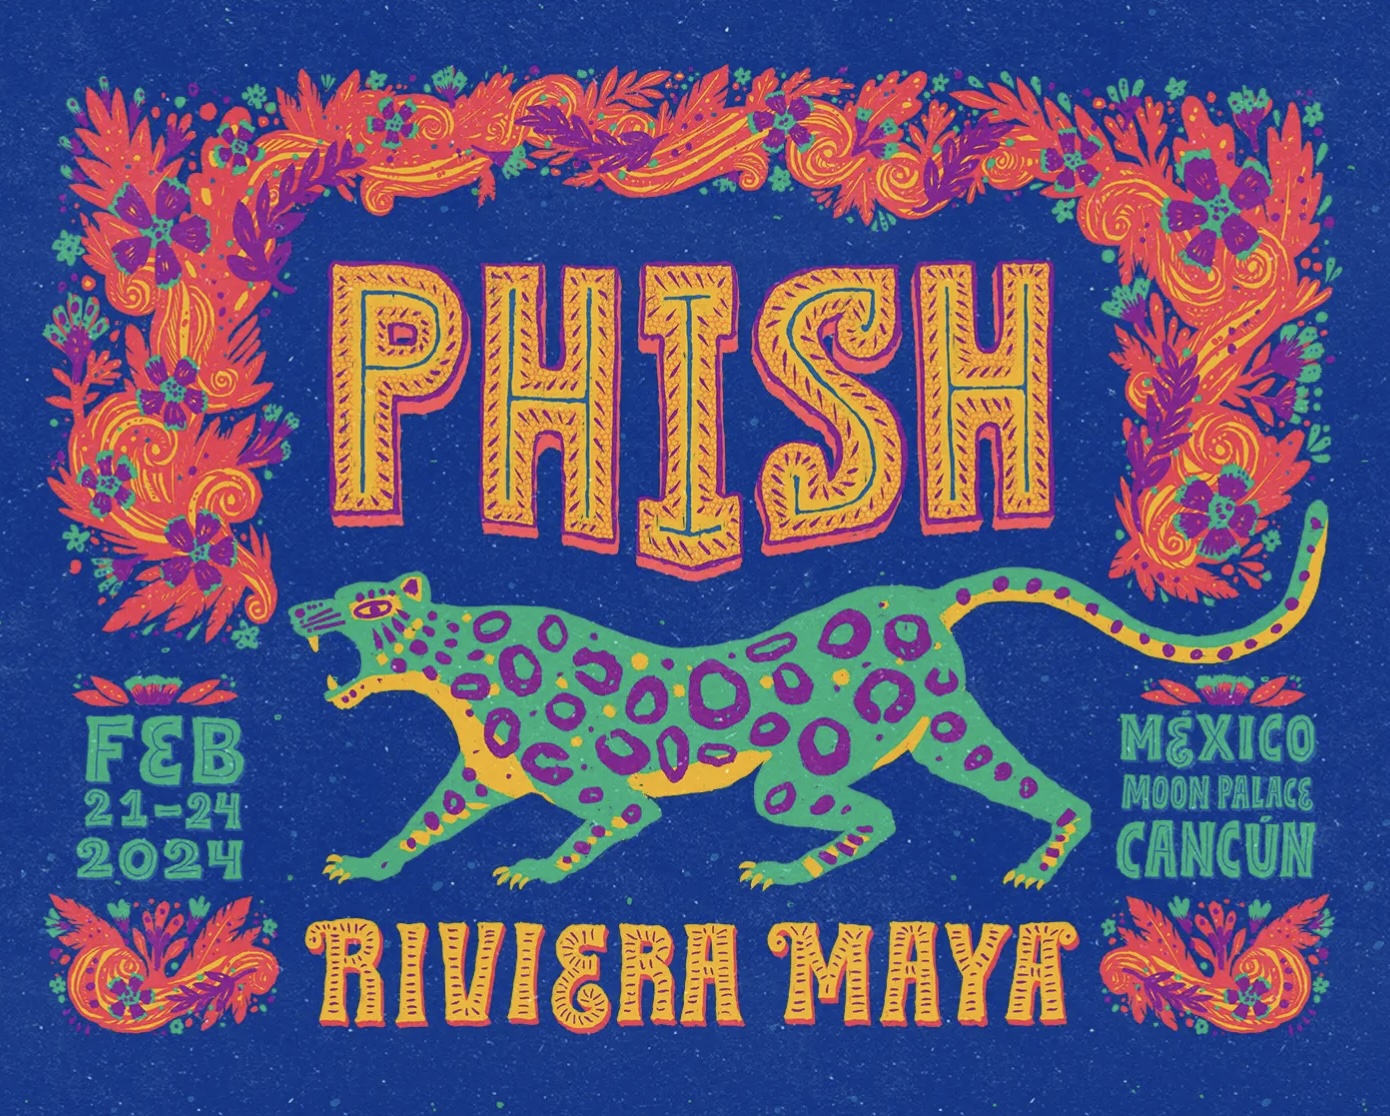 Phish: Riviera Maya lineup poster